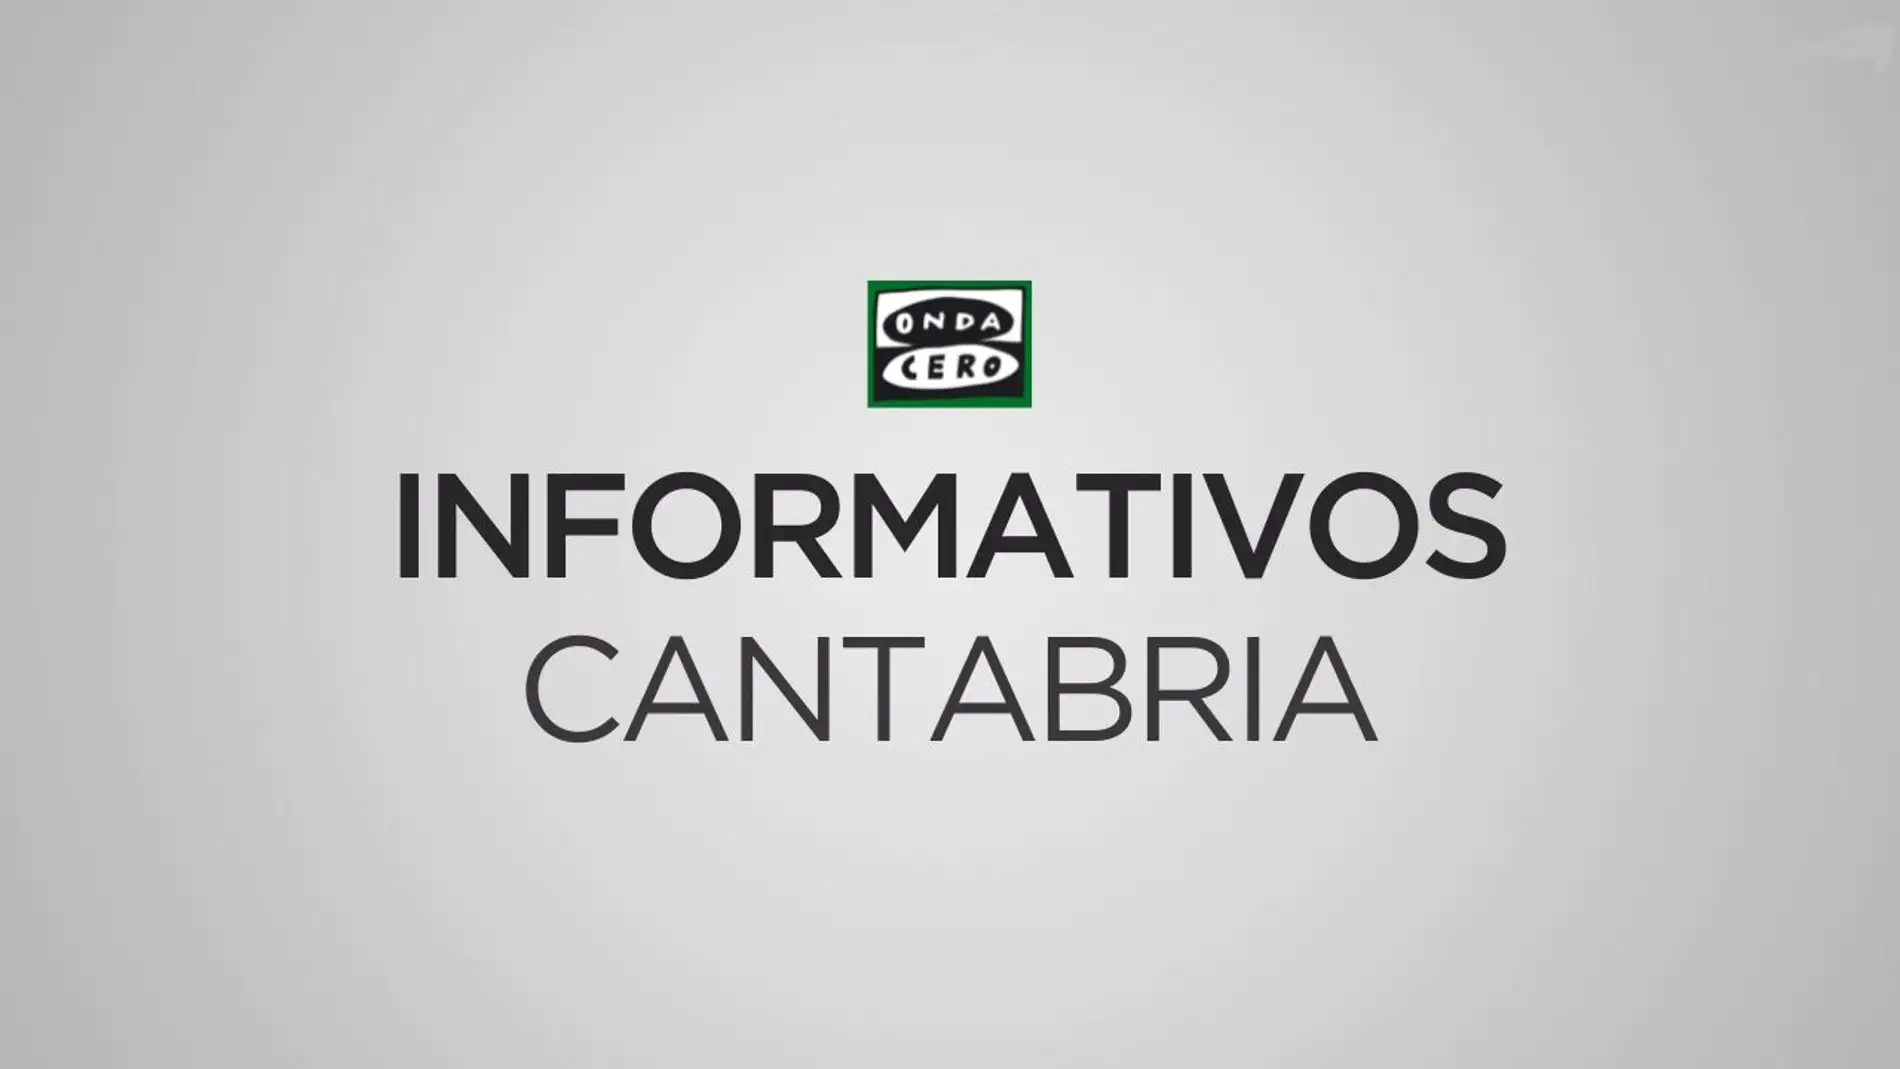 Informativos Cantabria Onda Cero